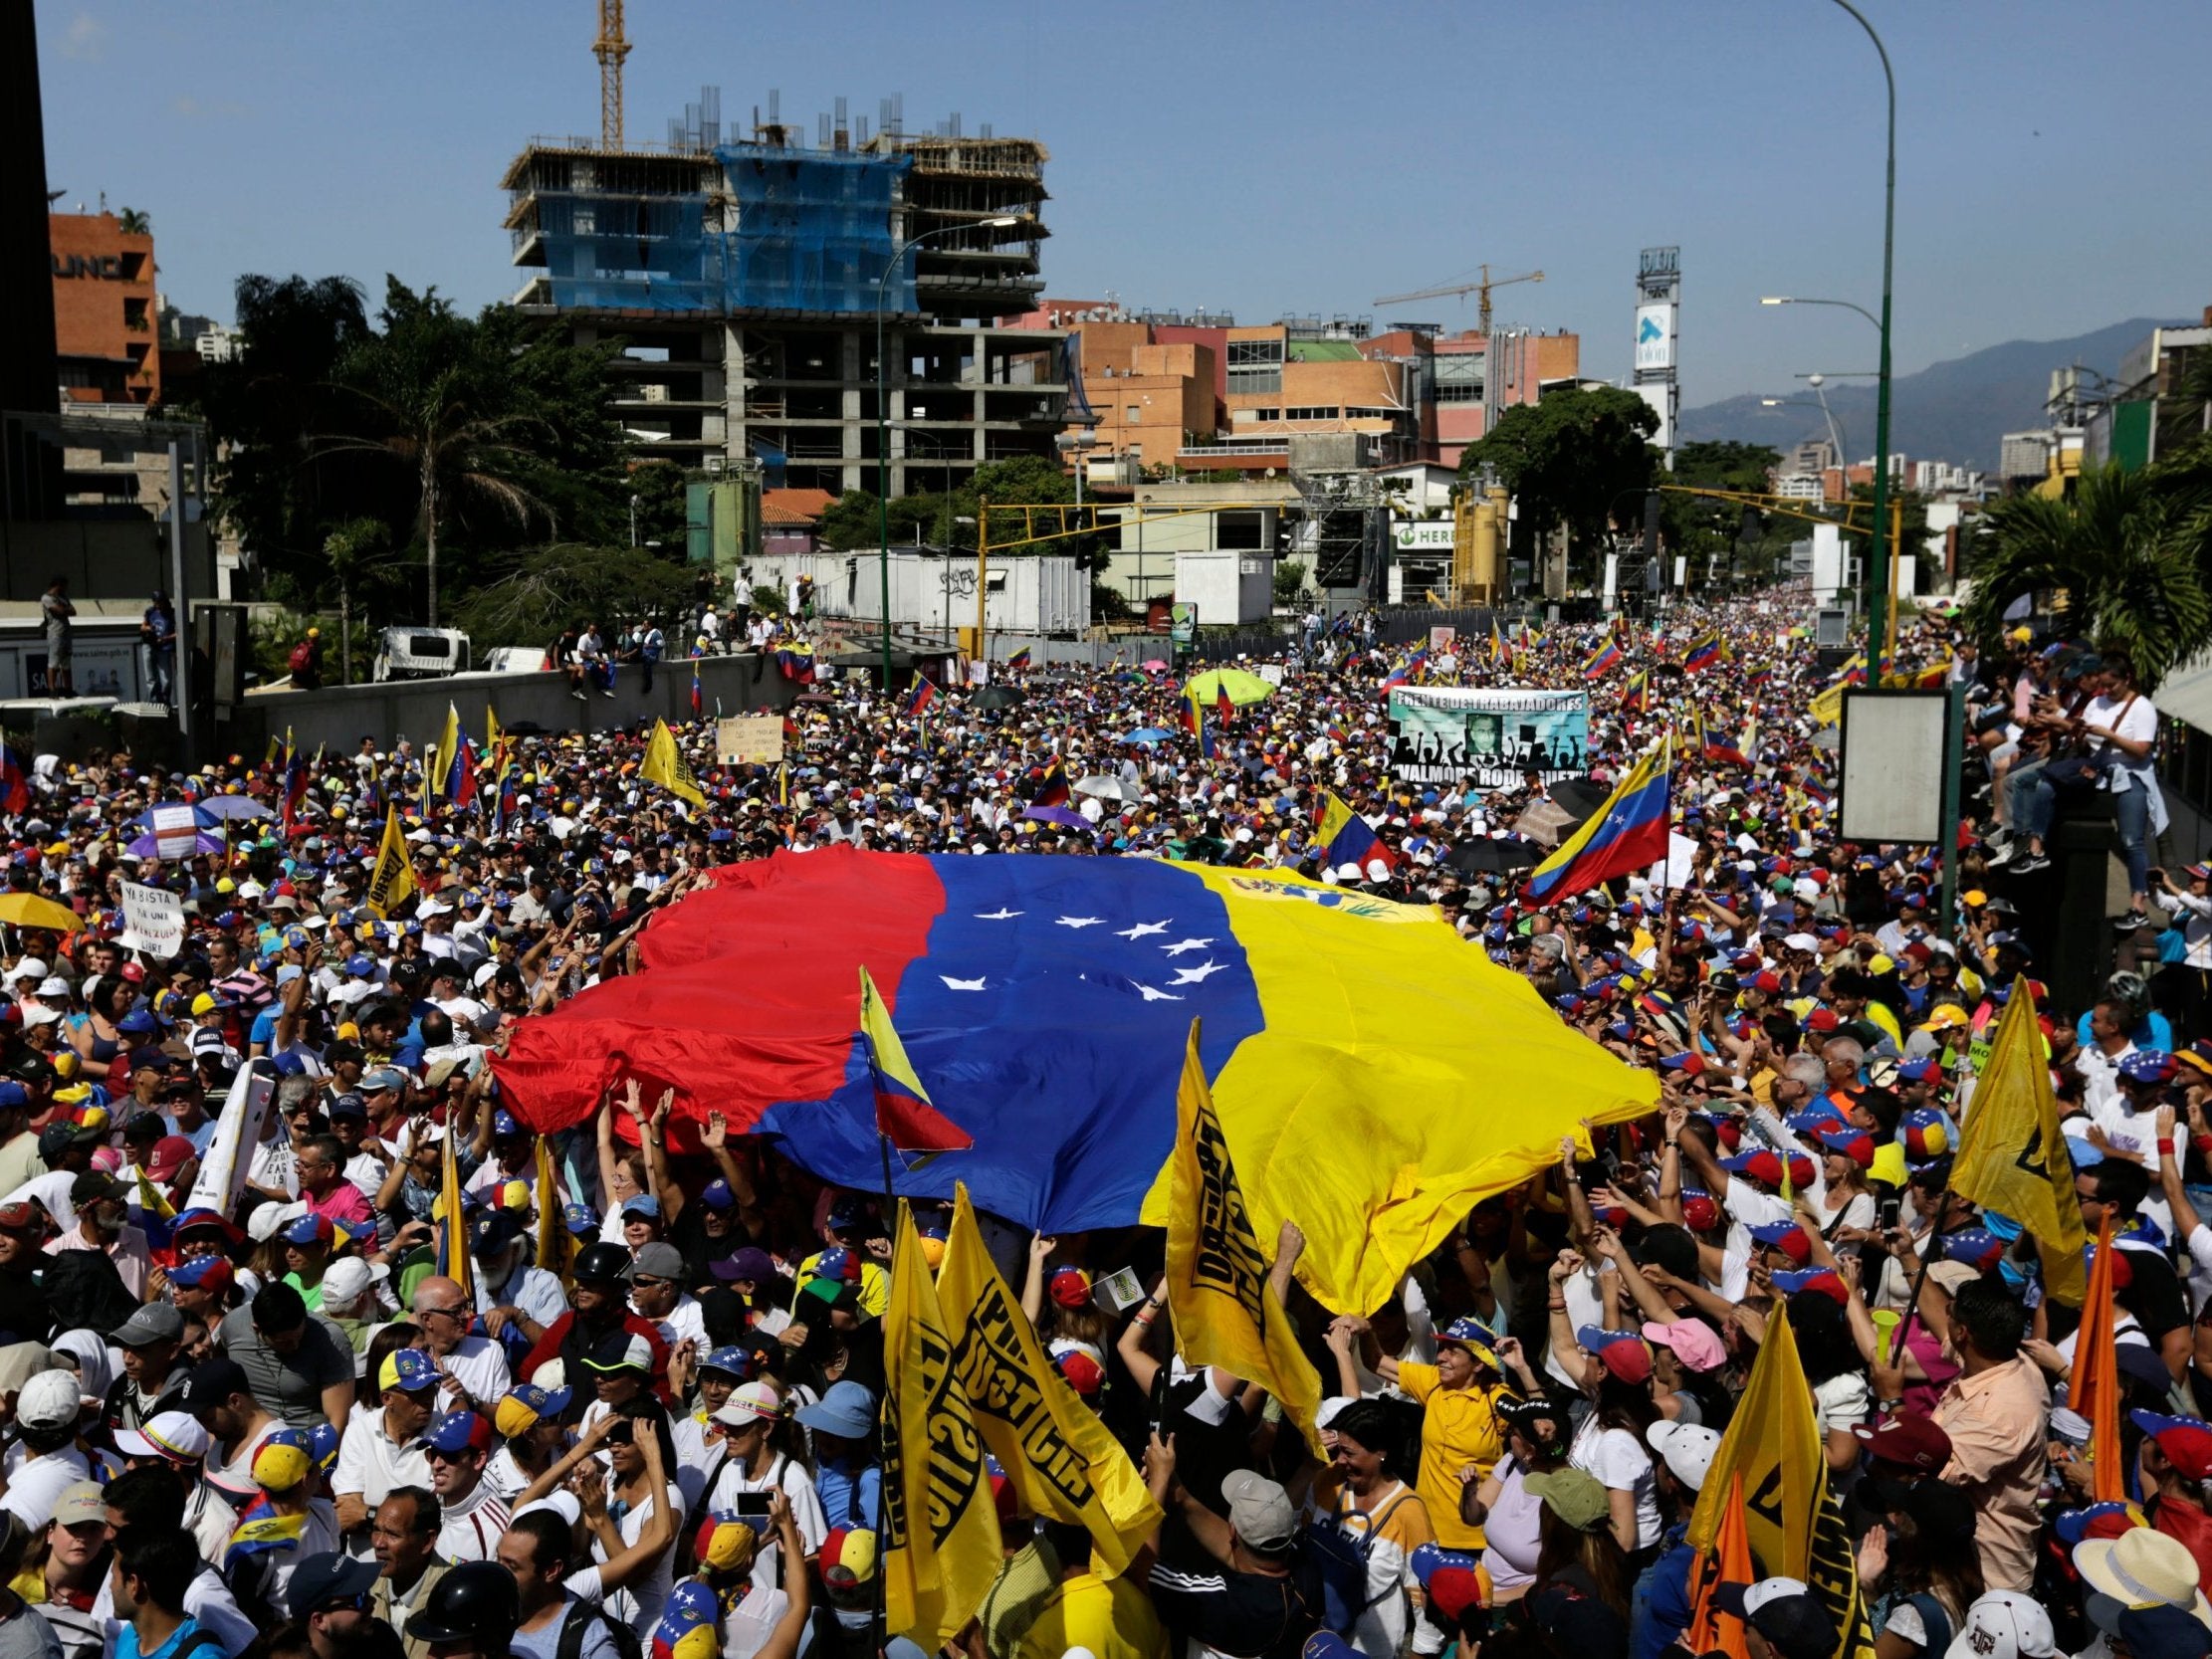 Protesters in Venezuela demand the resignation of President Maduro